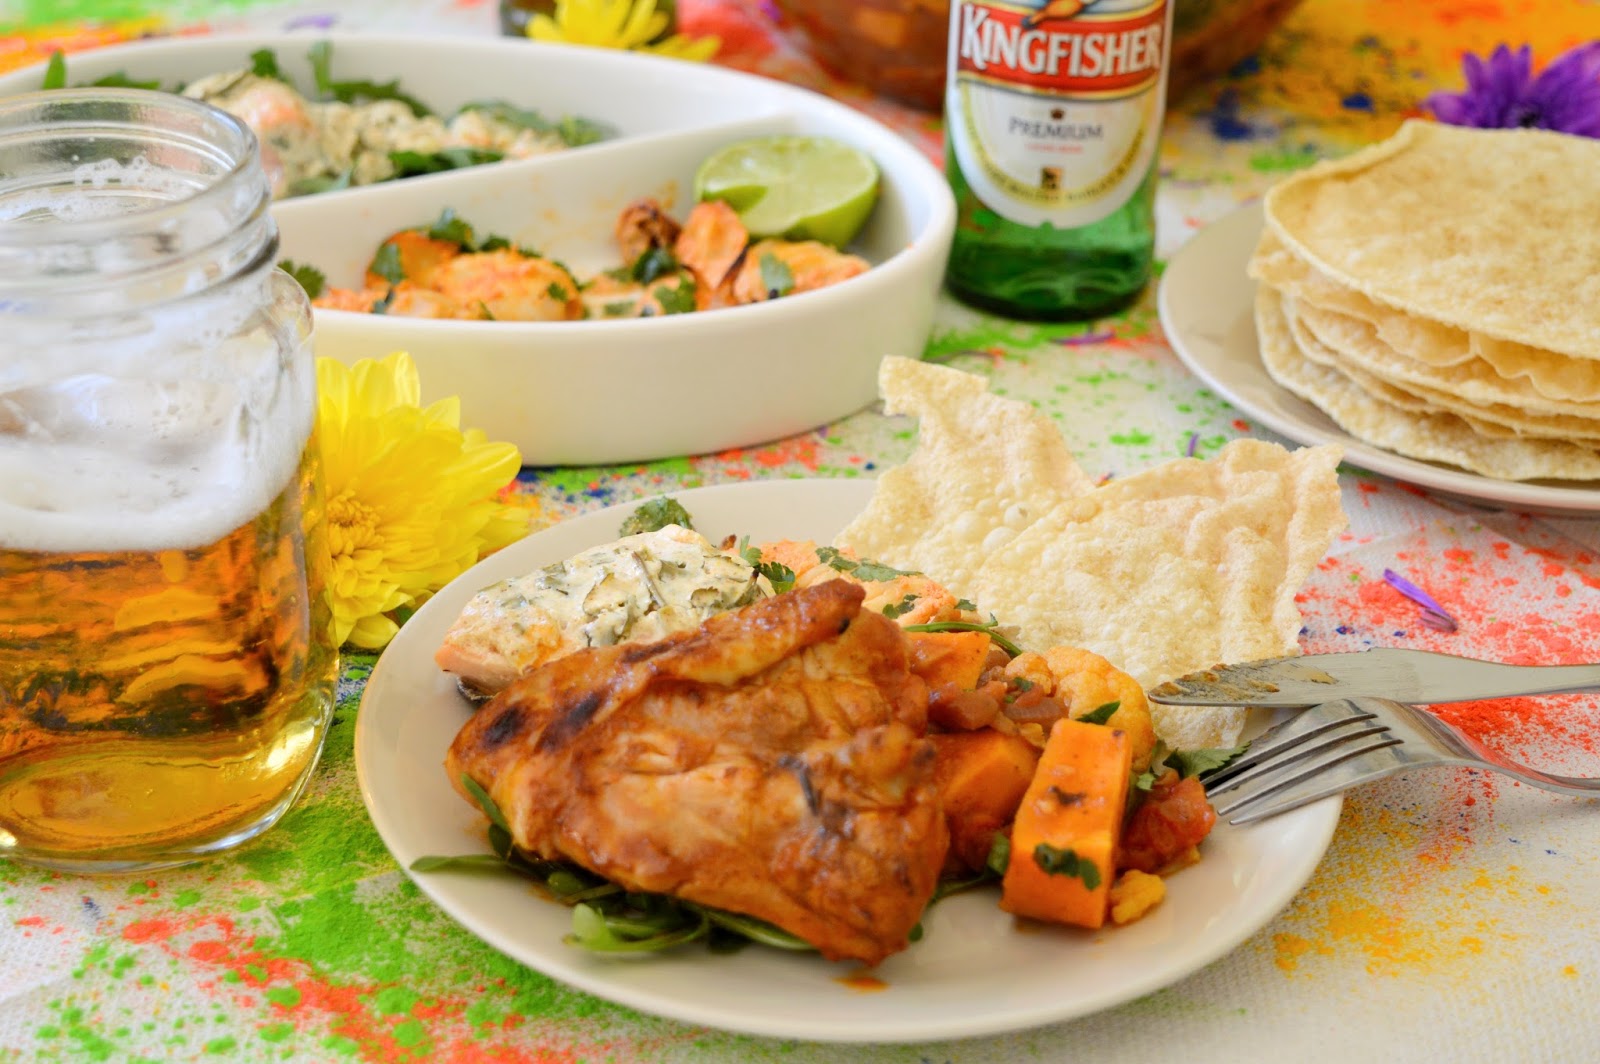 Kingfisher beer, Holi festival recipes, food bloggers, food blog